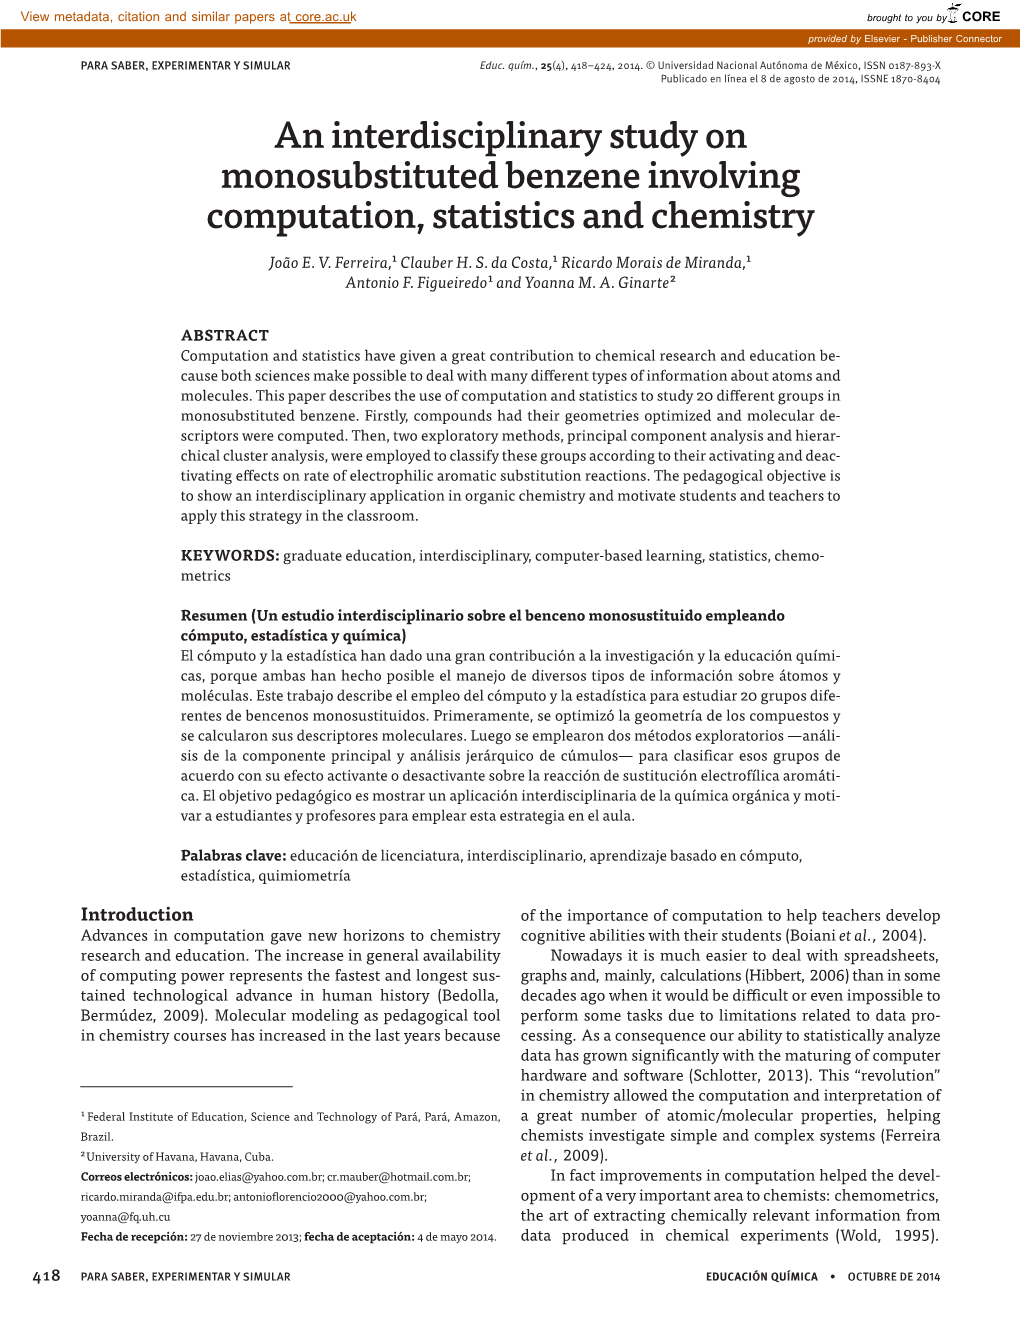 An Interdisciplinary Study on Monosubstituted Benzene Involving Computation, Statistics and Chemistry